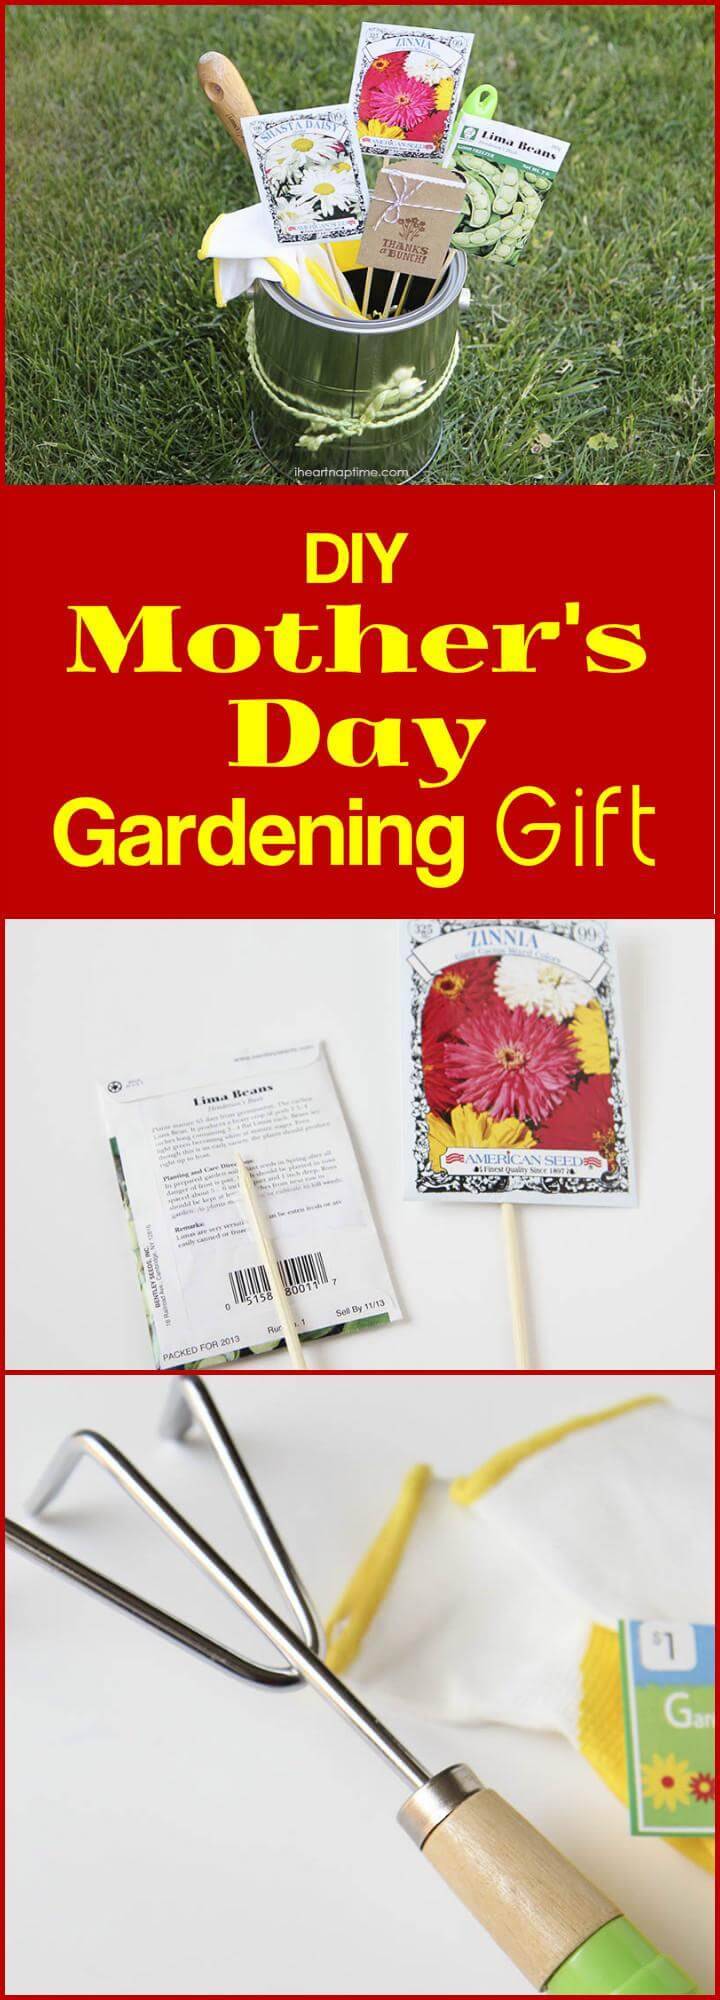 DIY Mother's Day Gardening Gift